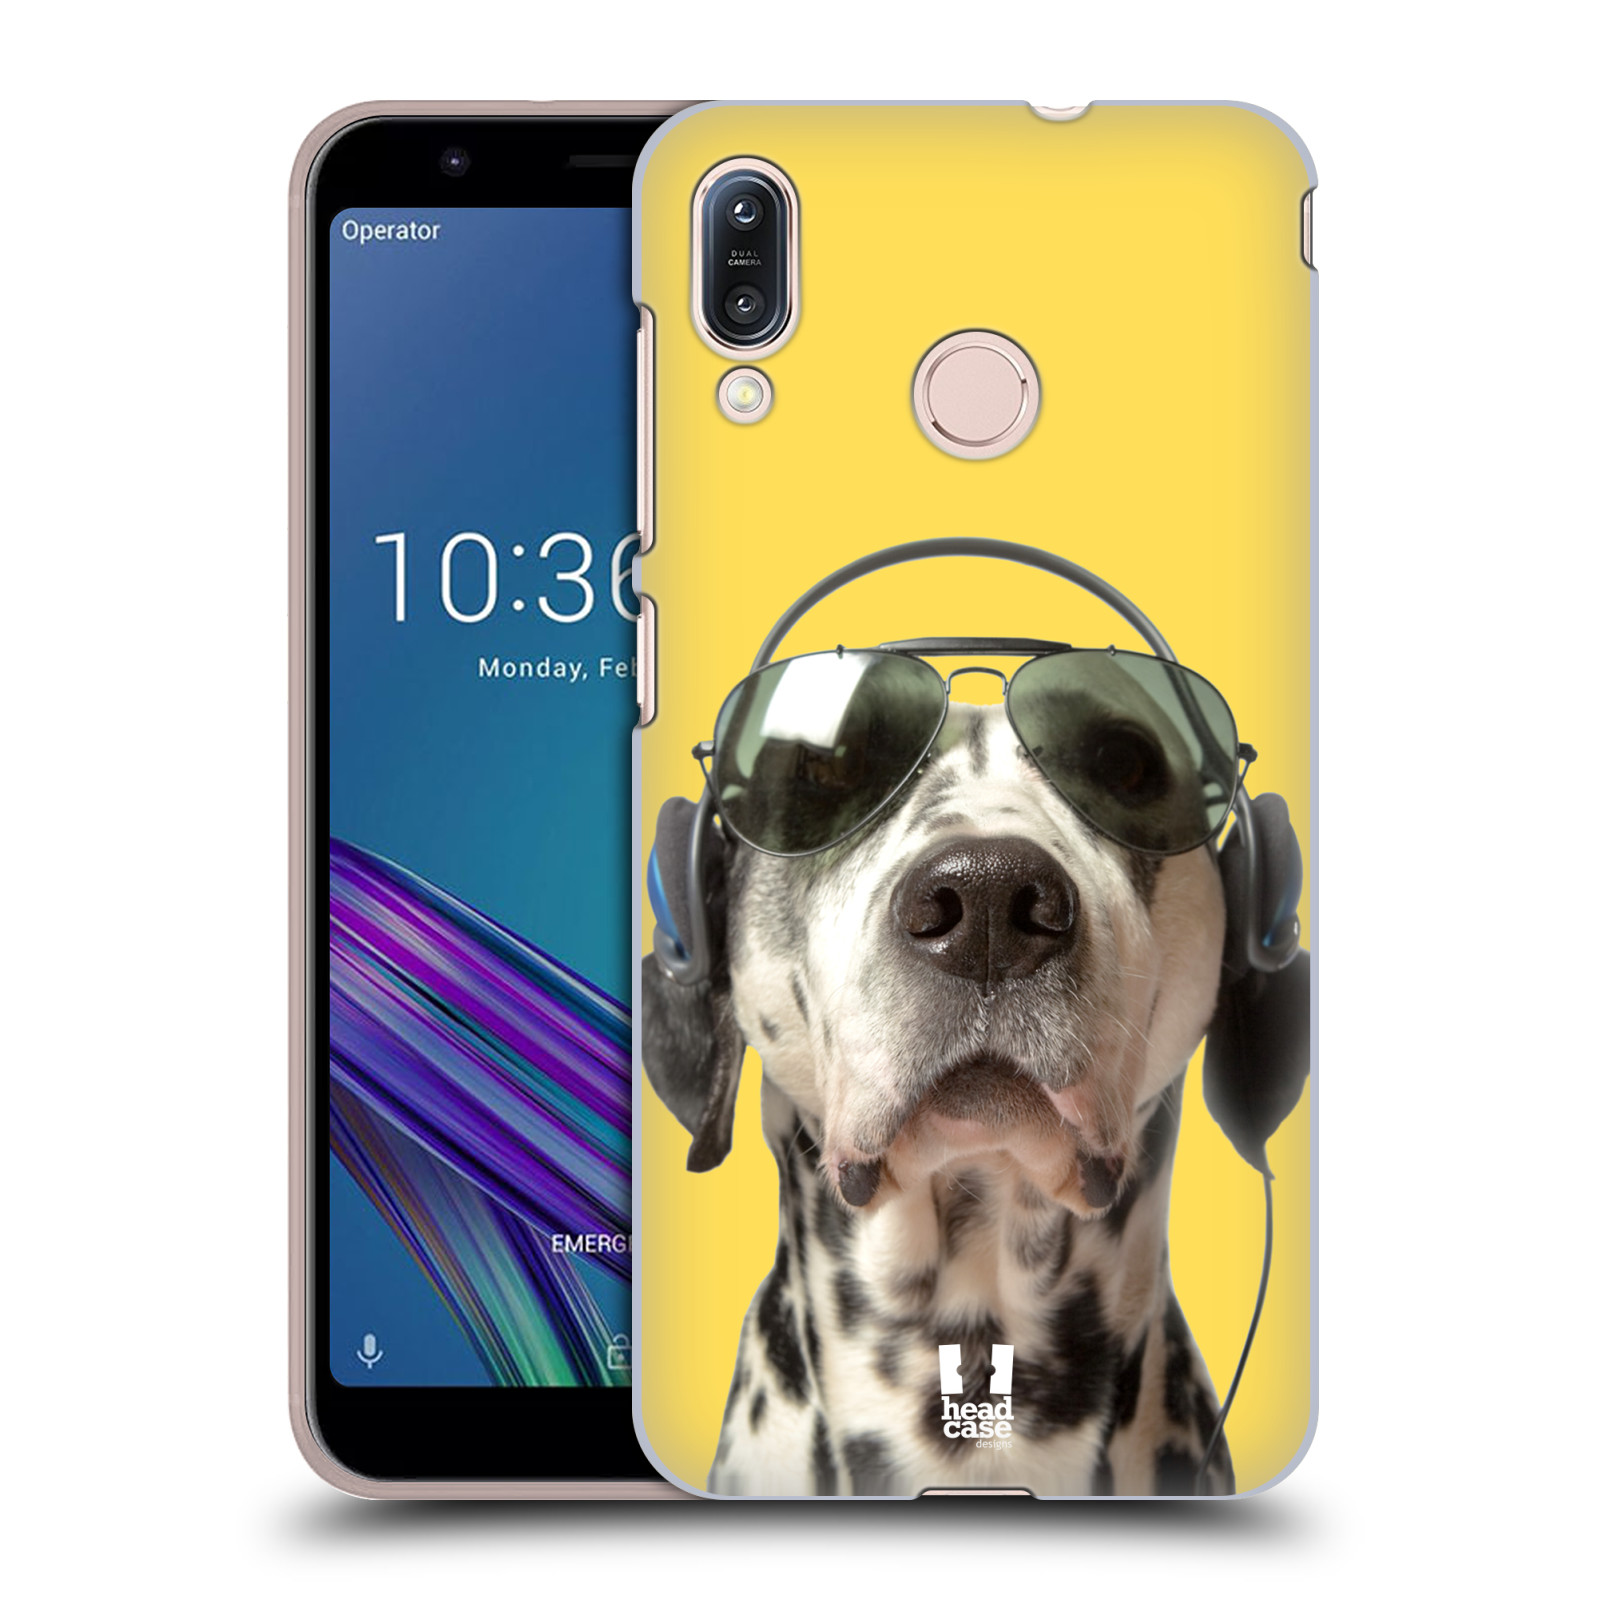 Pouzdro na mobil Asus Zenfone Max M1 (ZB555KL) - HEAD CASE - vzor Legrační zvířátka dalmatin se sluchátky žlutá